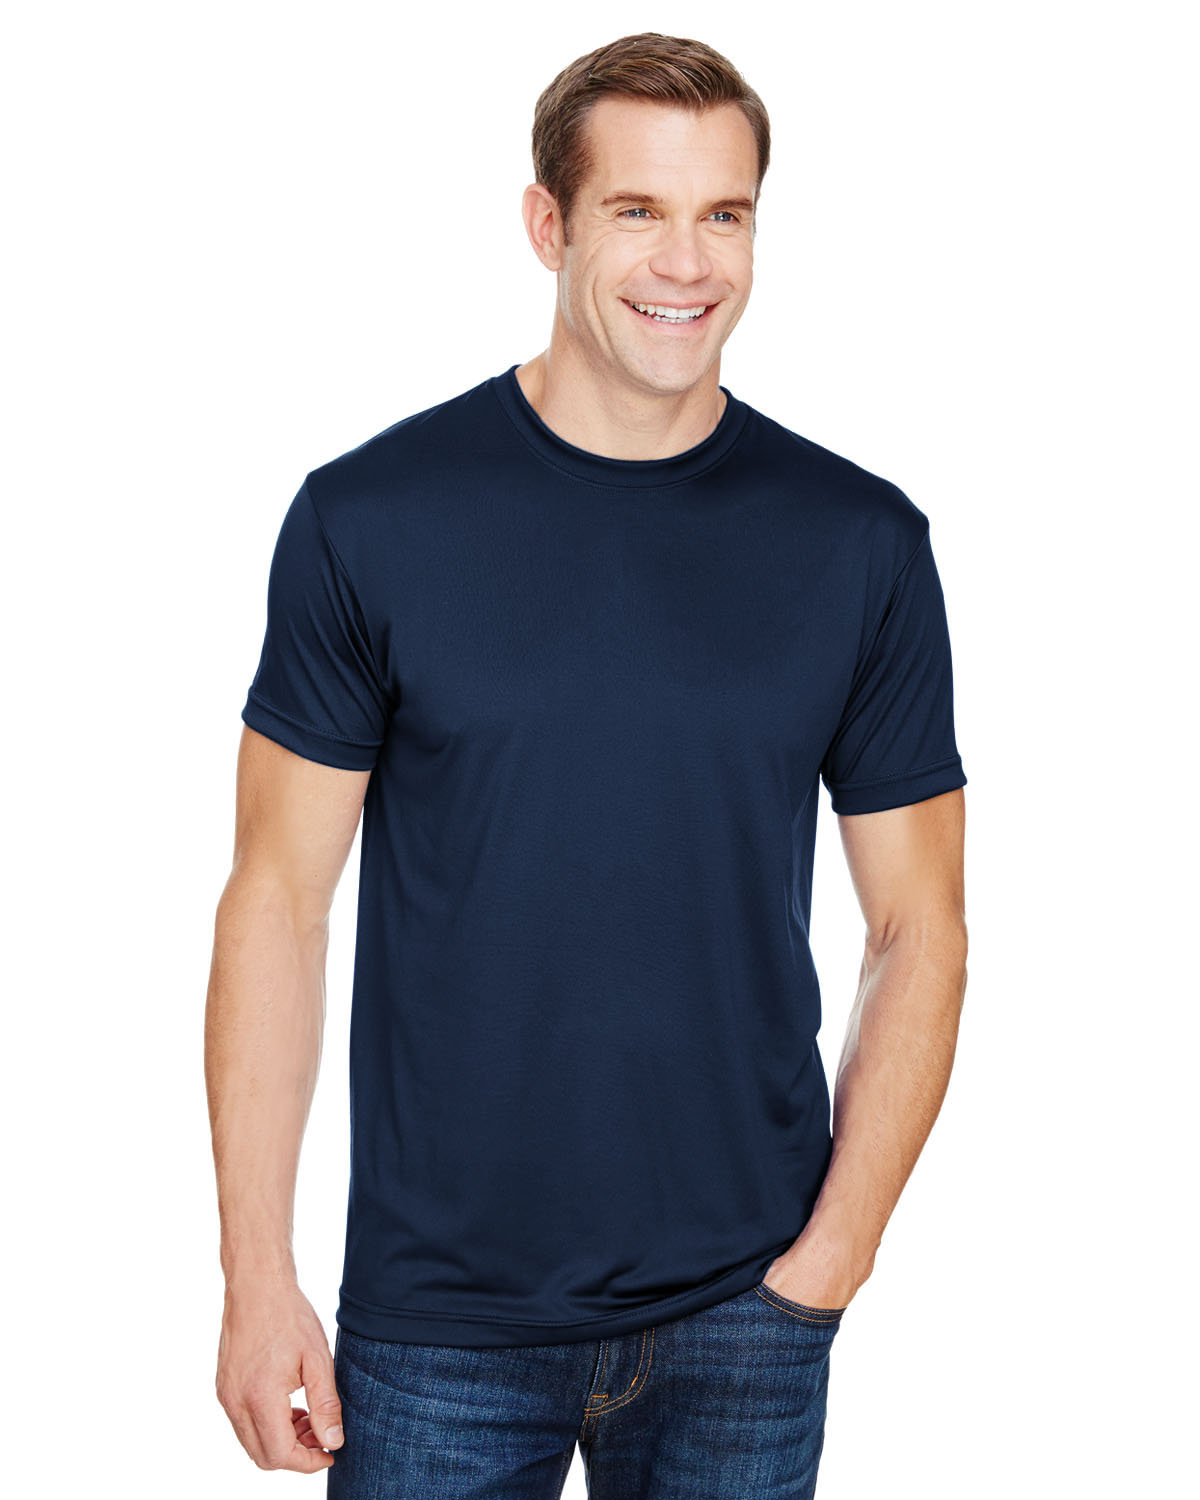 Bayside Ba5300 Unisex Polyester Performance T Shirt | Jiffy Shirts